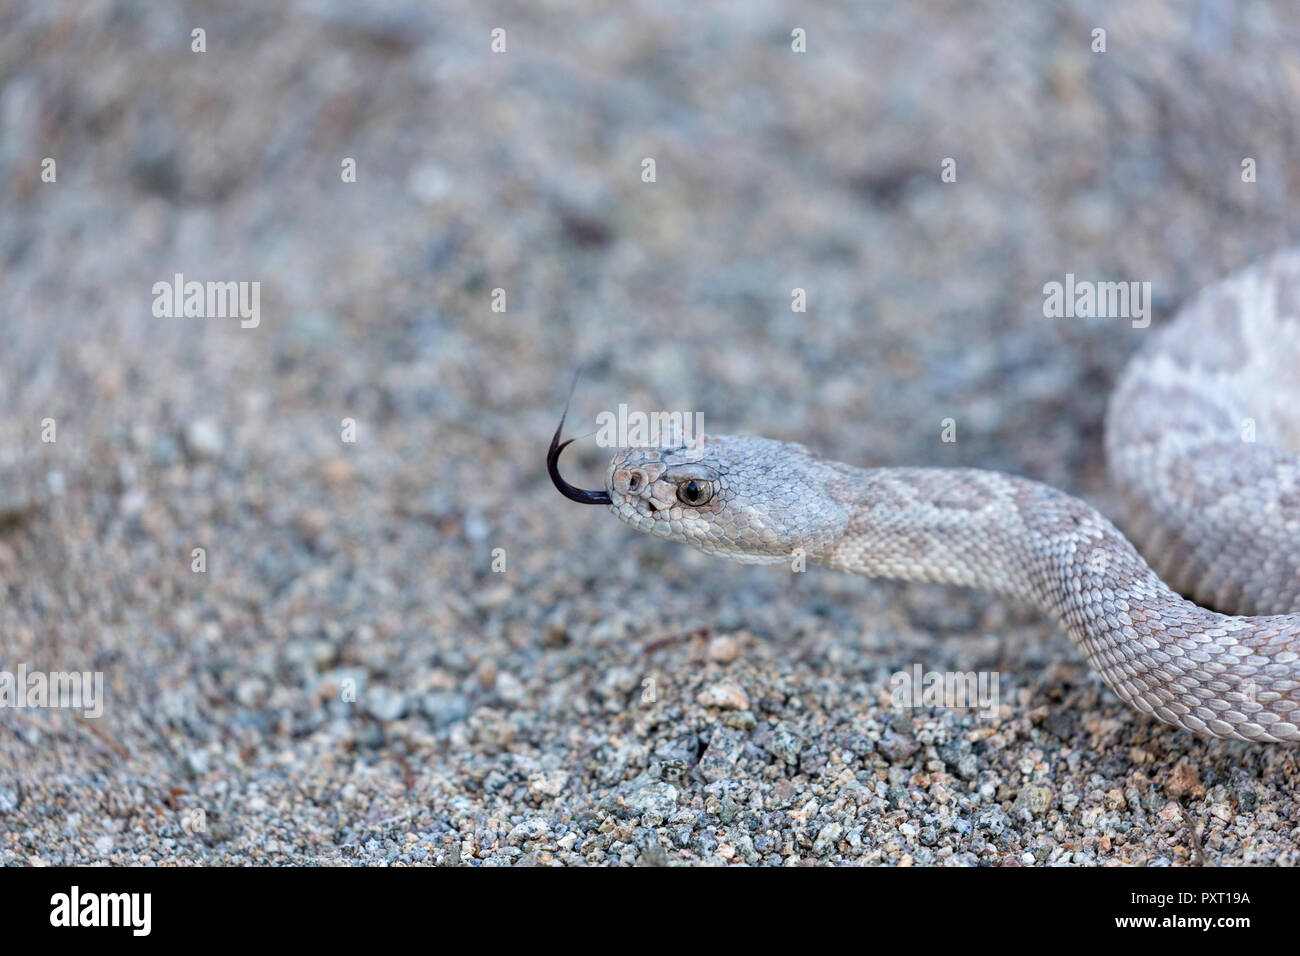 Ash colored morph of the endemic rattleless rattlesnake, Crotalus catalinensis, Isla Santa Catalina, Baja California Sur, Mexico Stock Photo